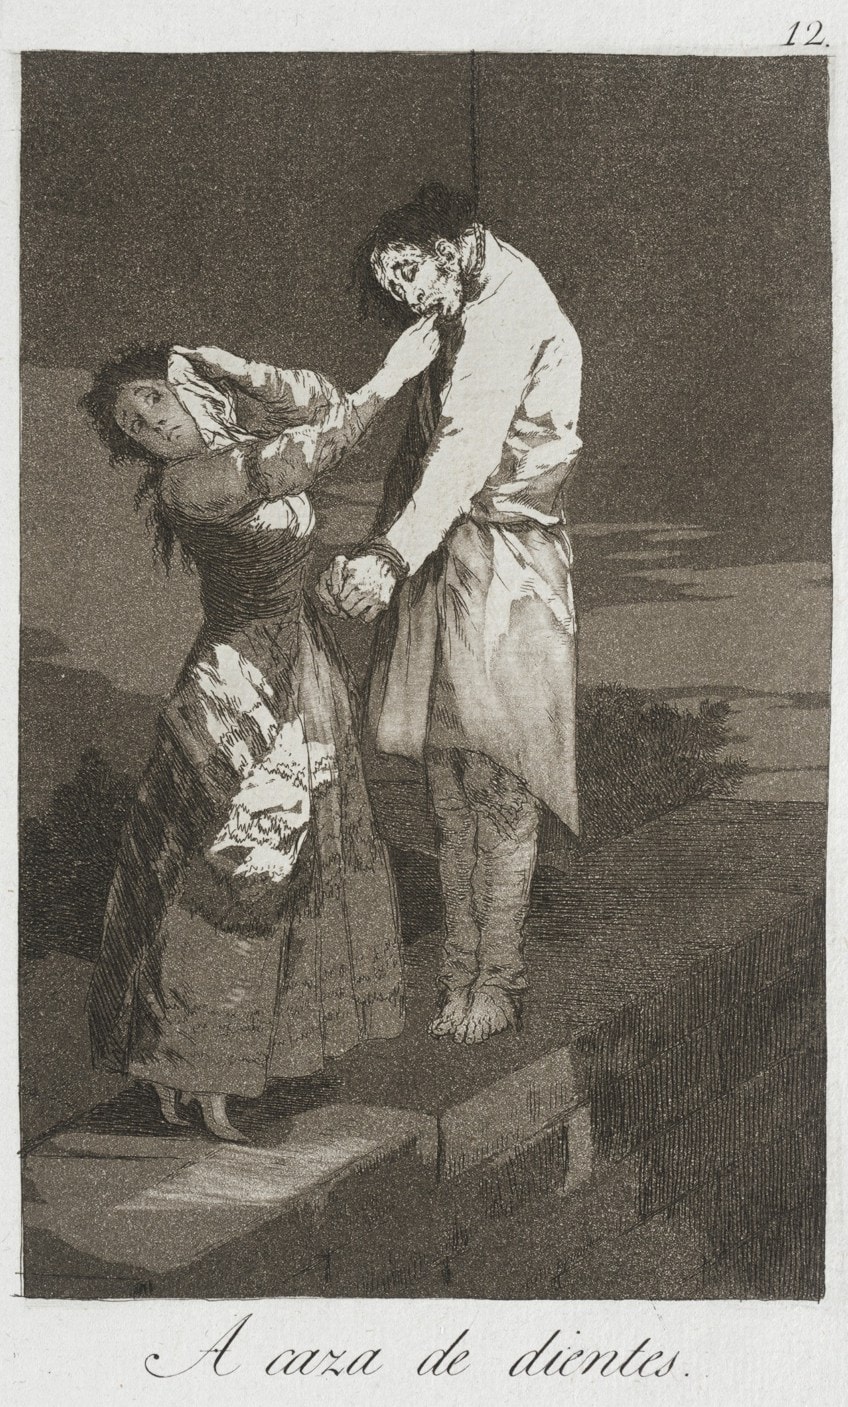 Art by Spanish Painter Goya